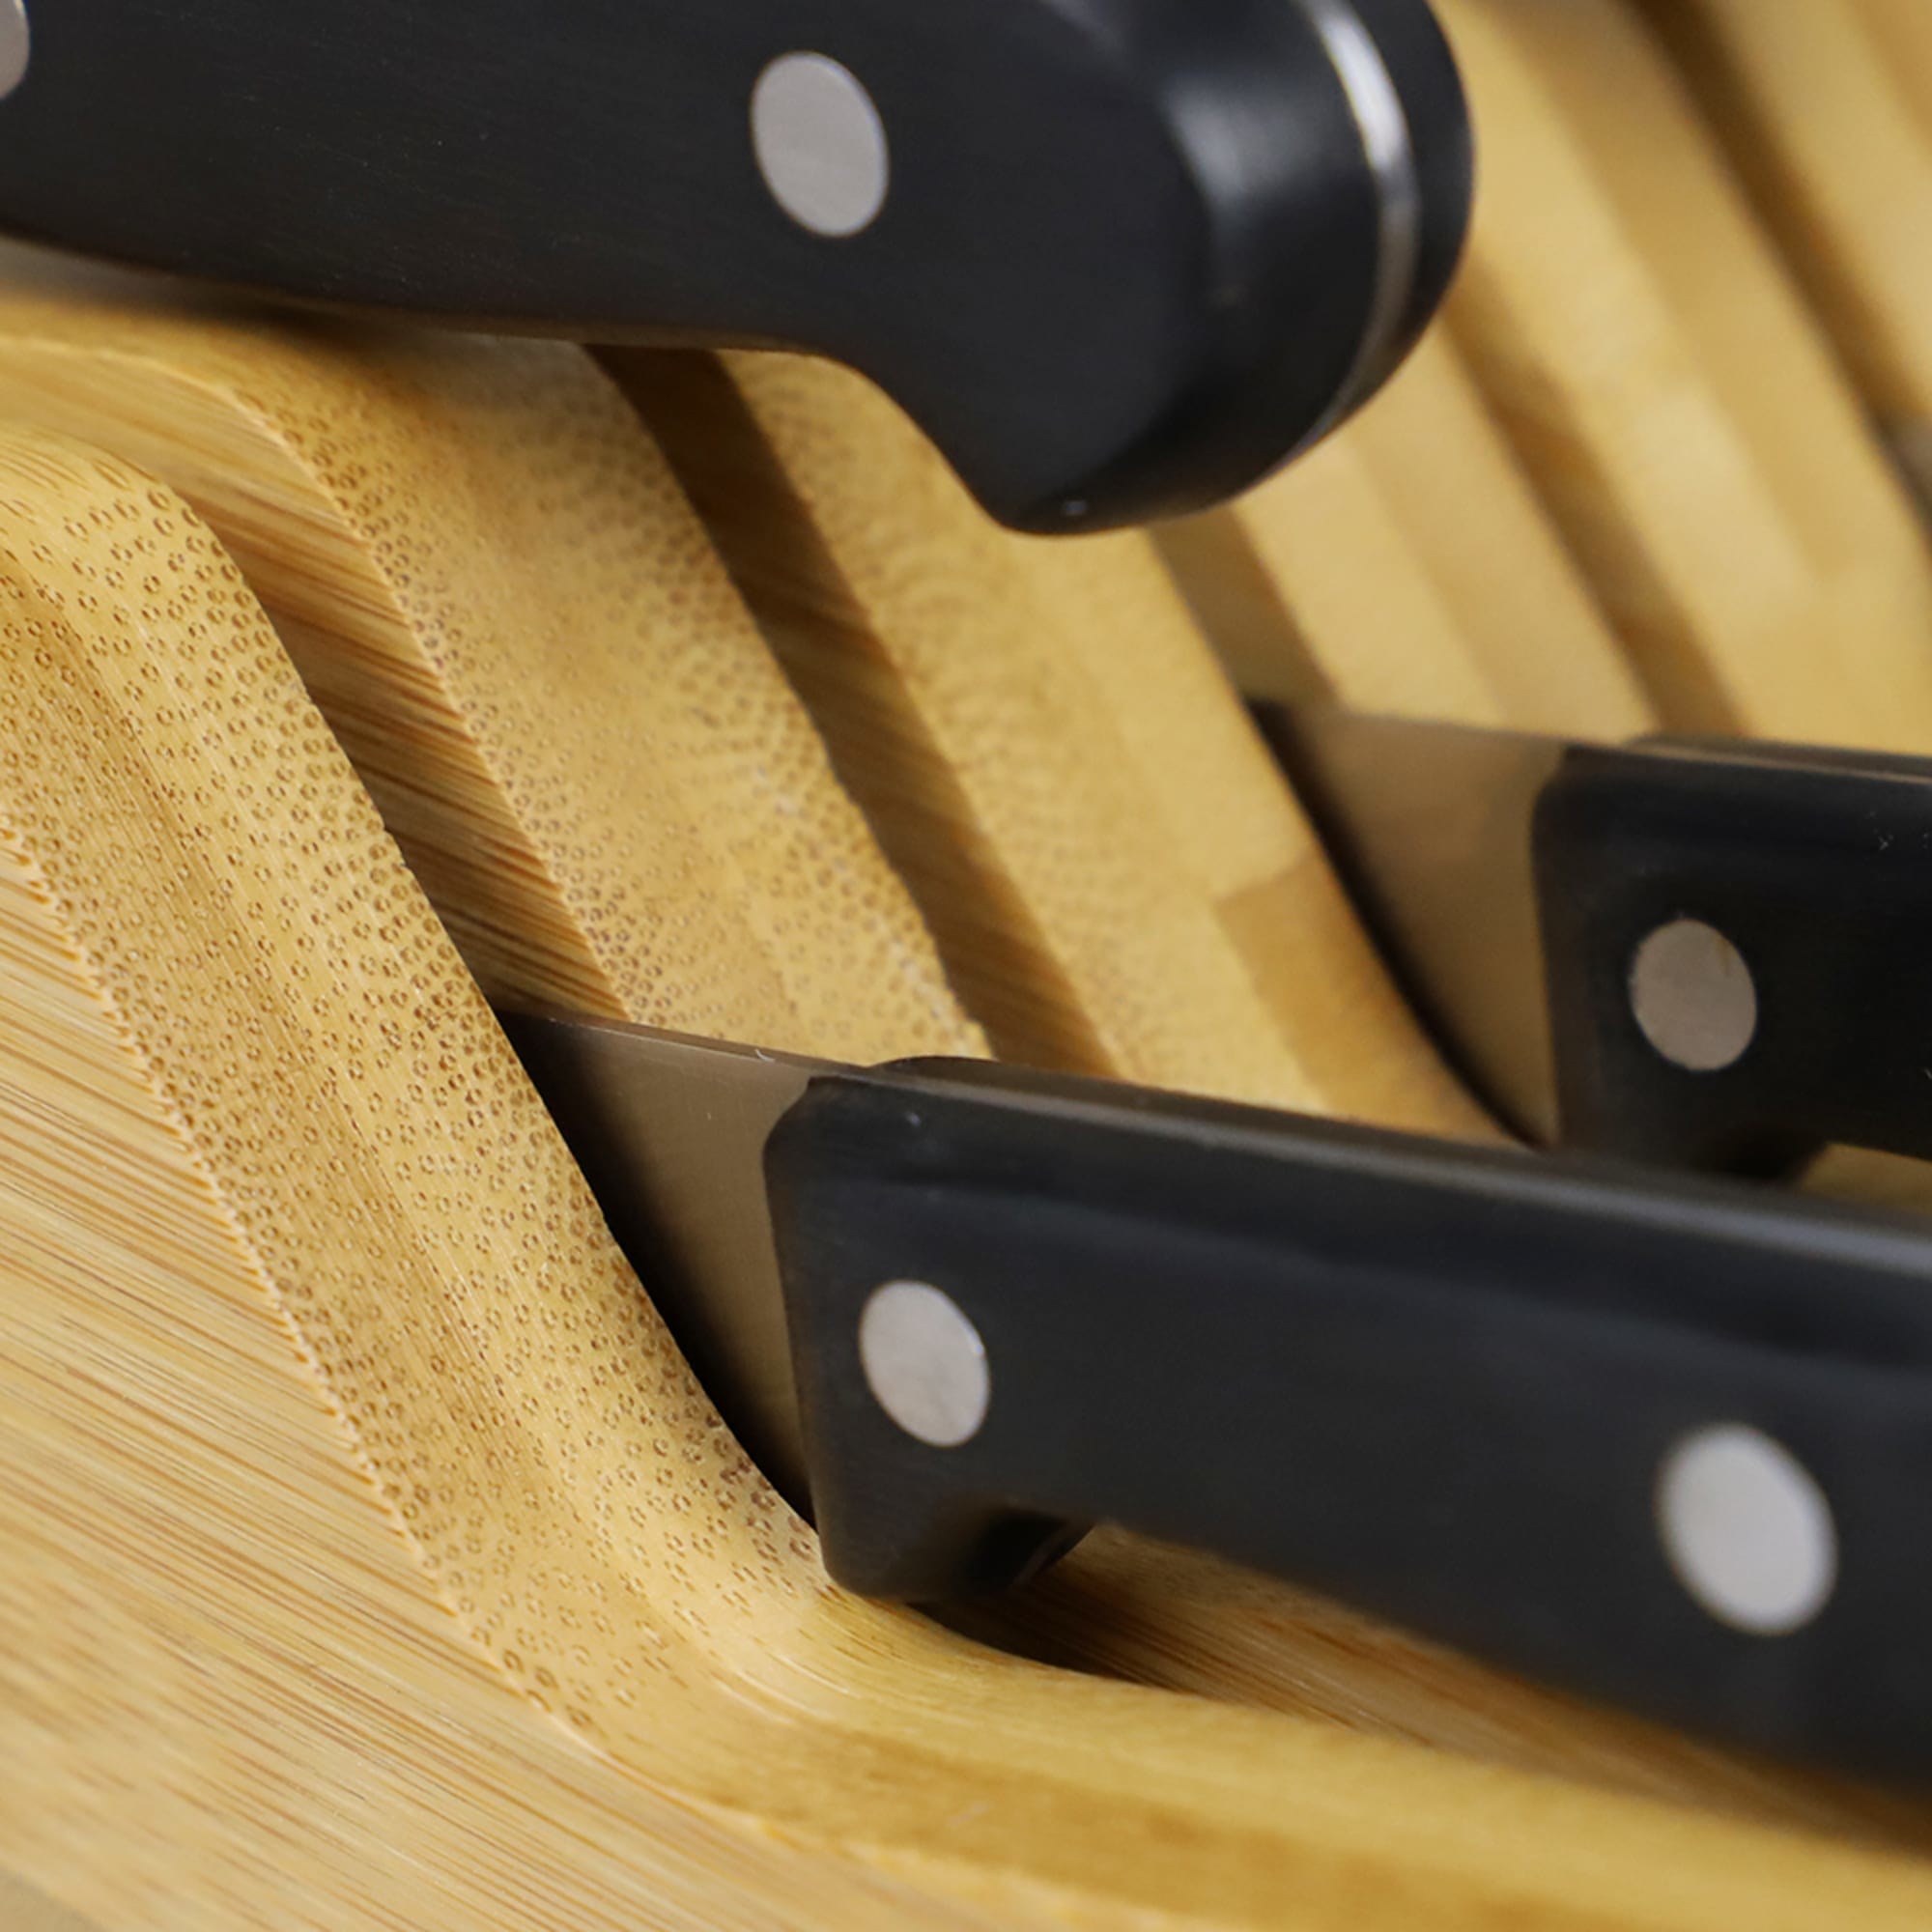 Cook N Home 11-Slot In-Drawer Bamboo Knife Storage Block Organizer